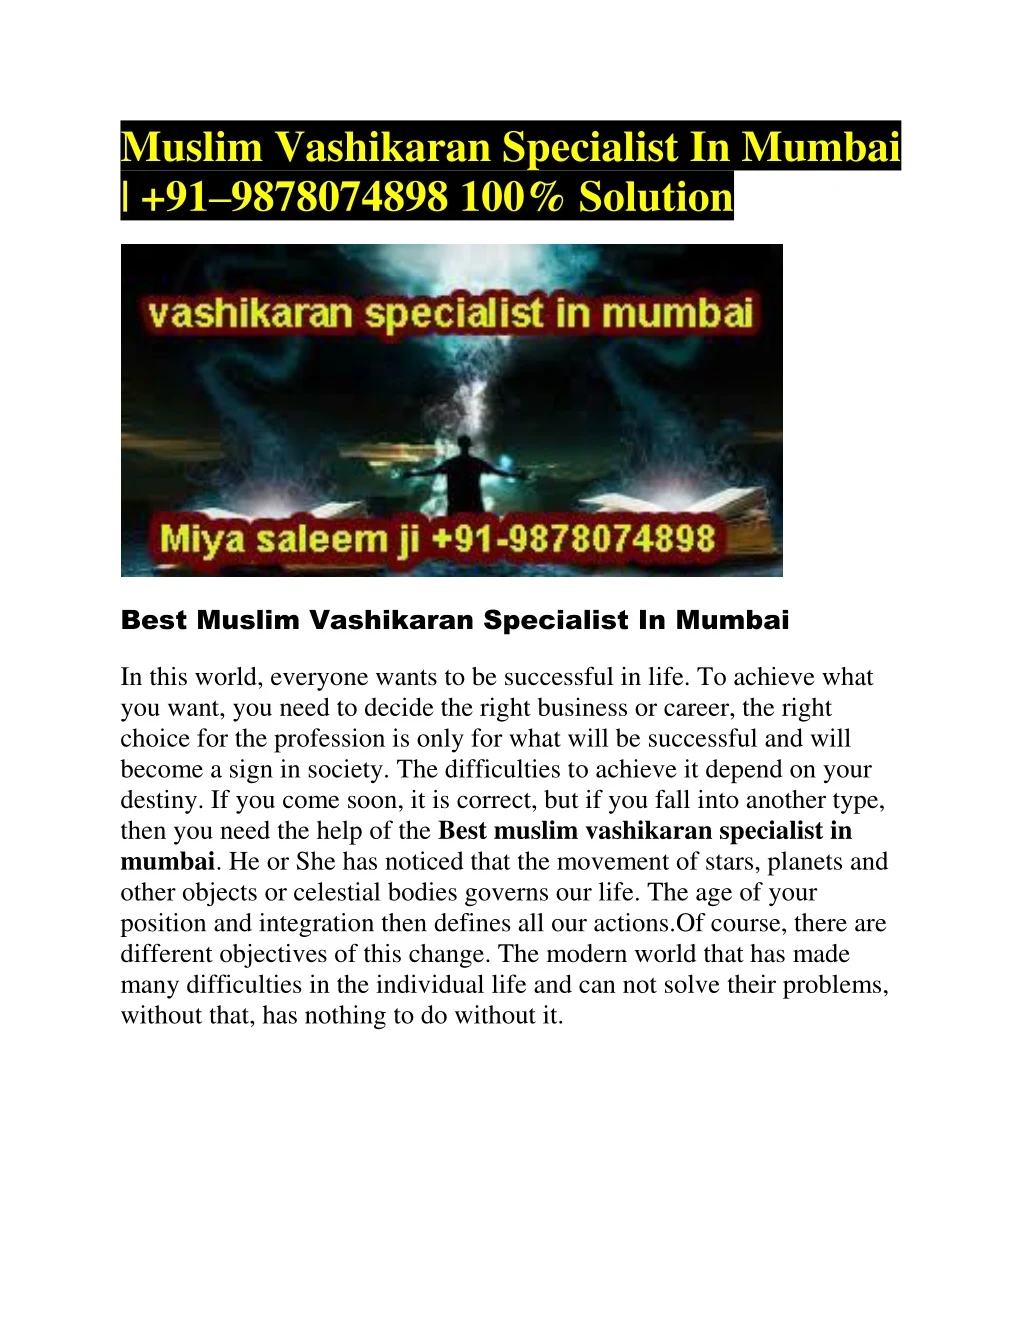 muslim vashikaran specialist in mumbai